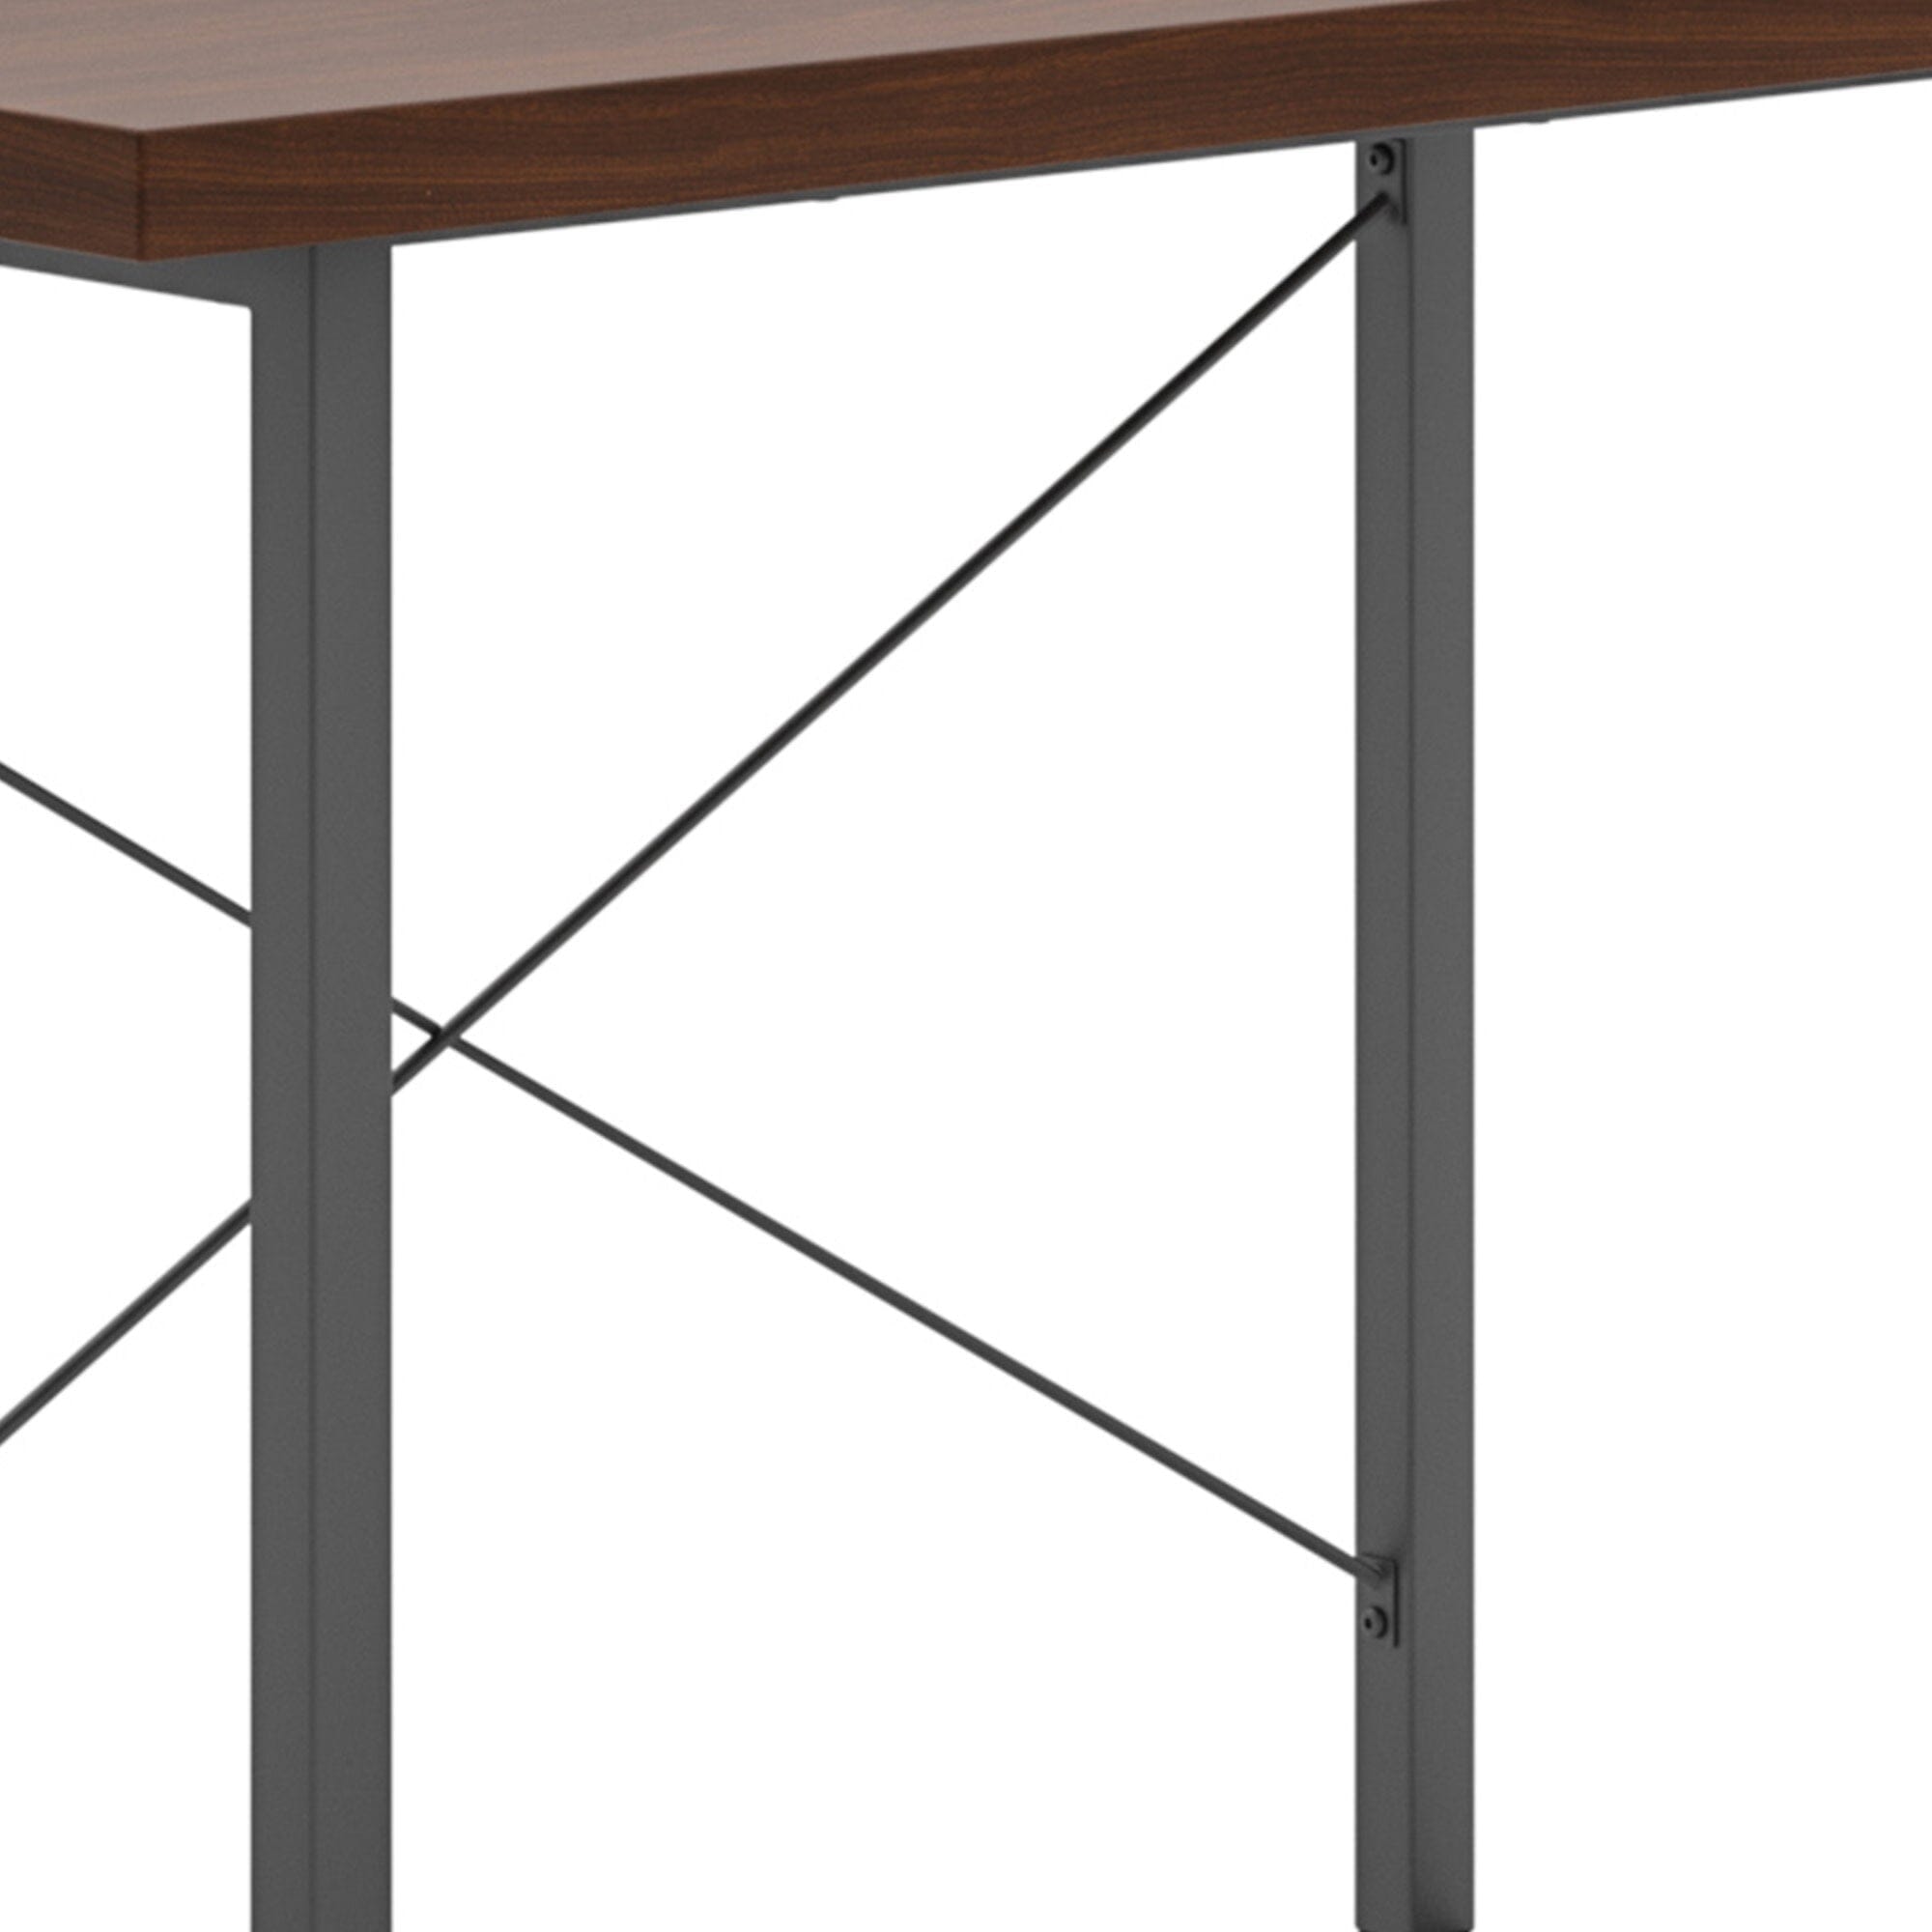 Modern & Contemporary Desk By Merge Desk Merge